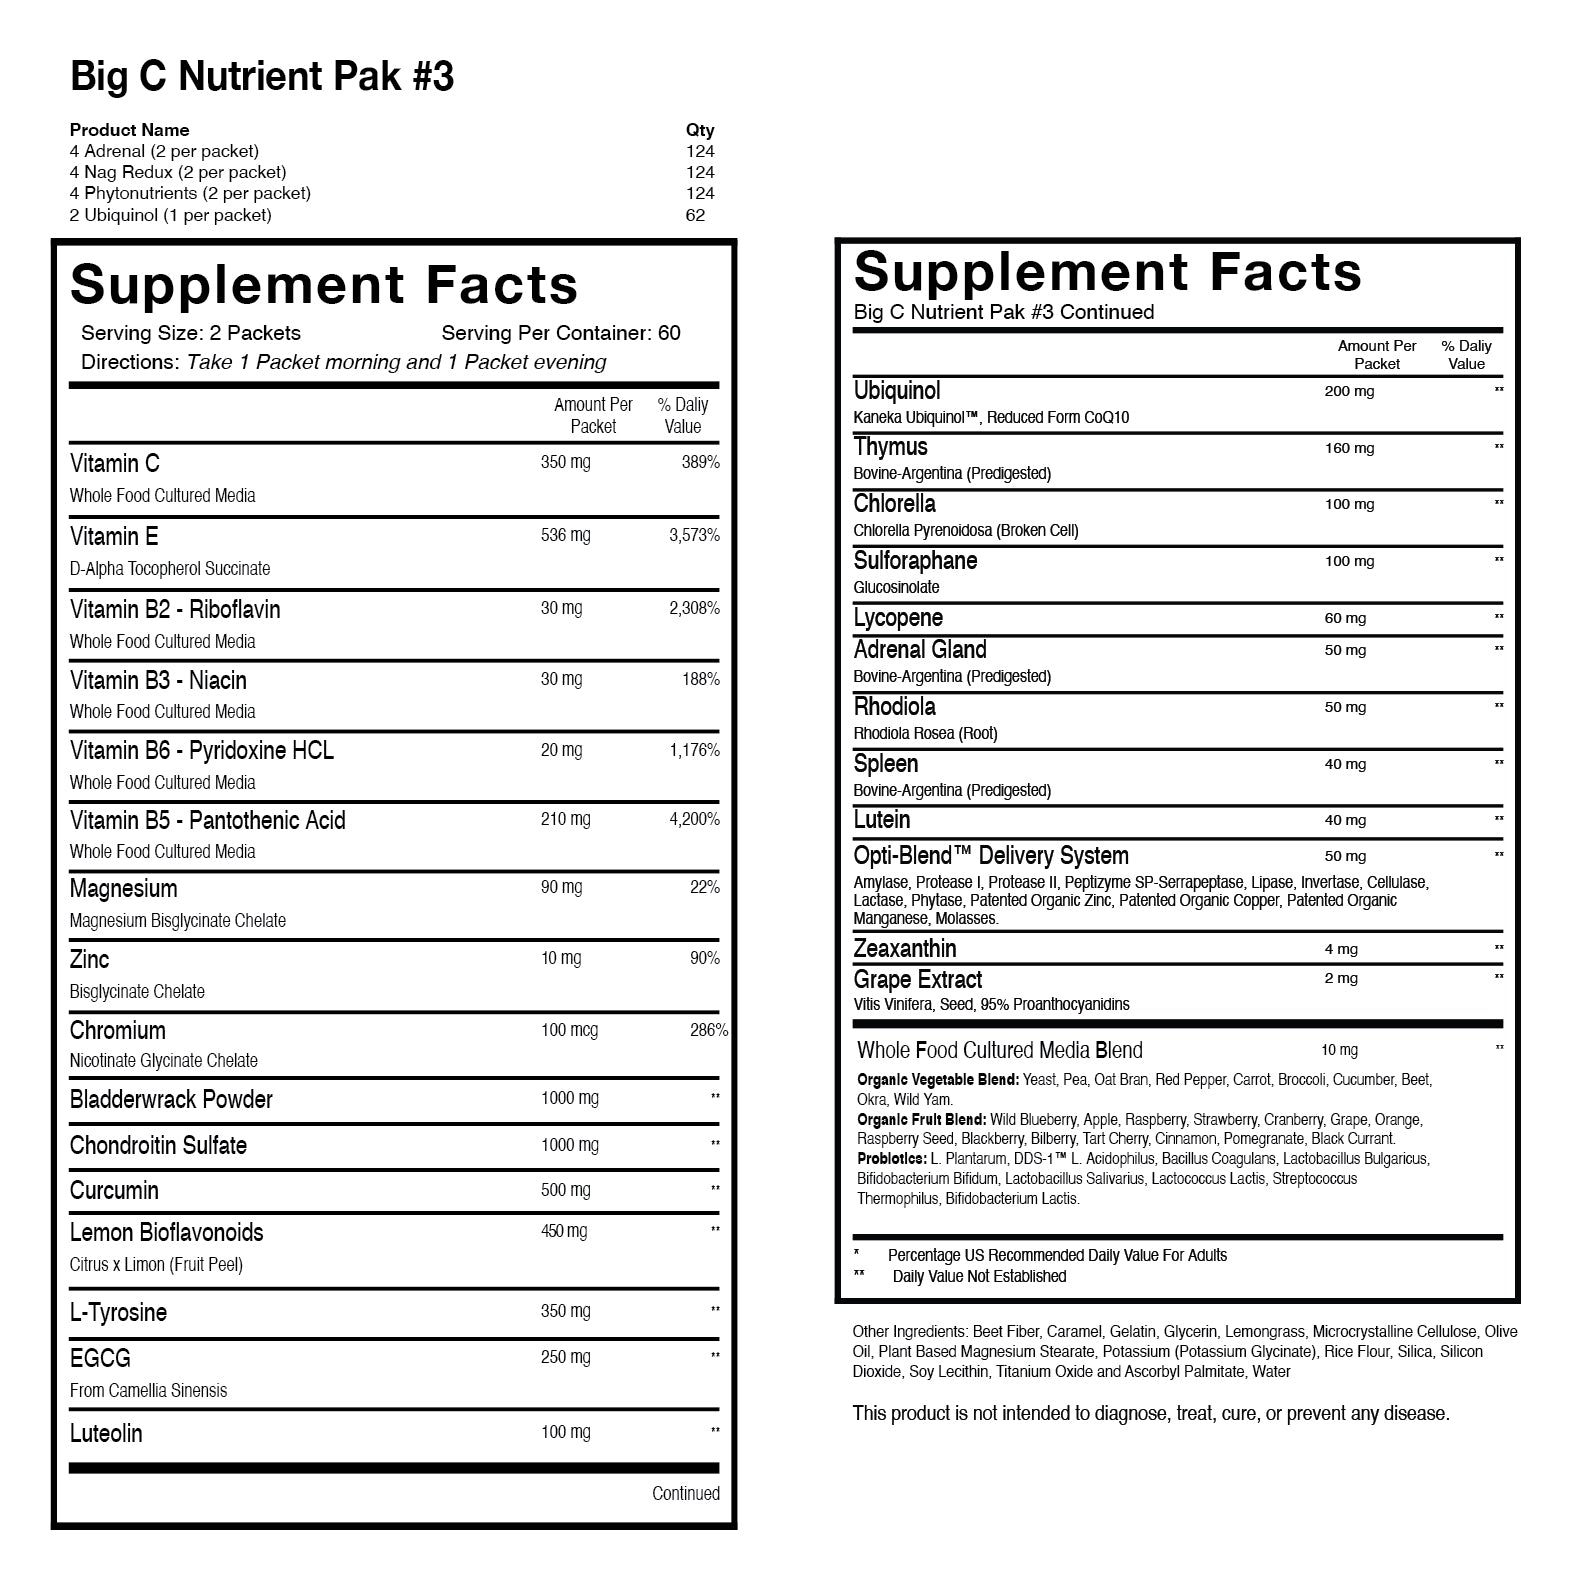 Big C Pak 3 supplement facts.